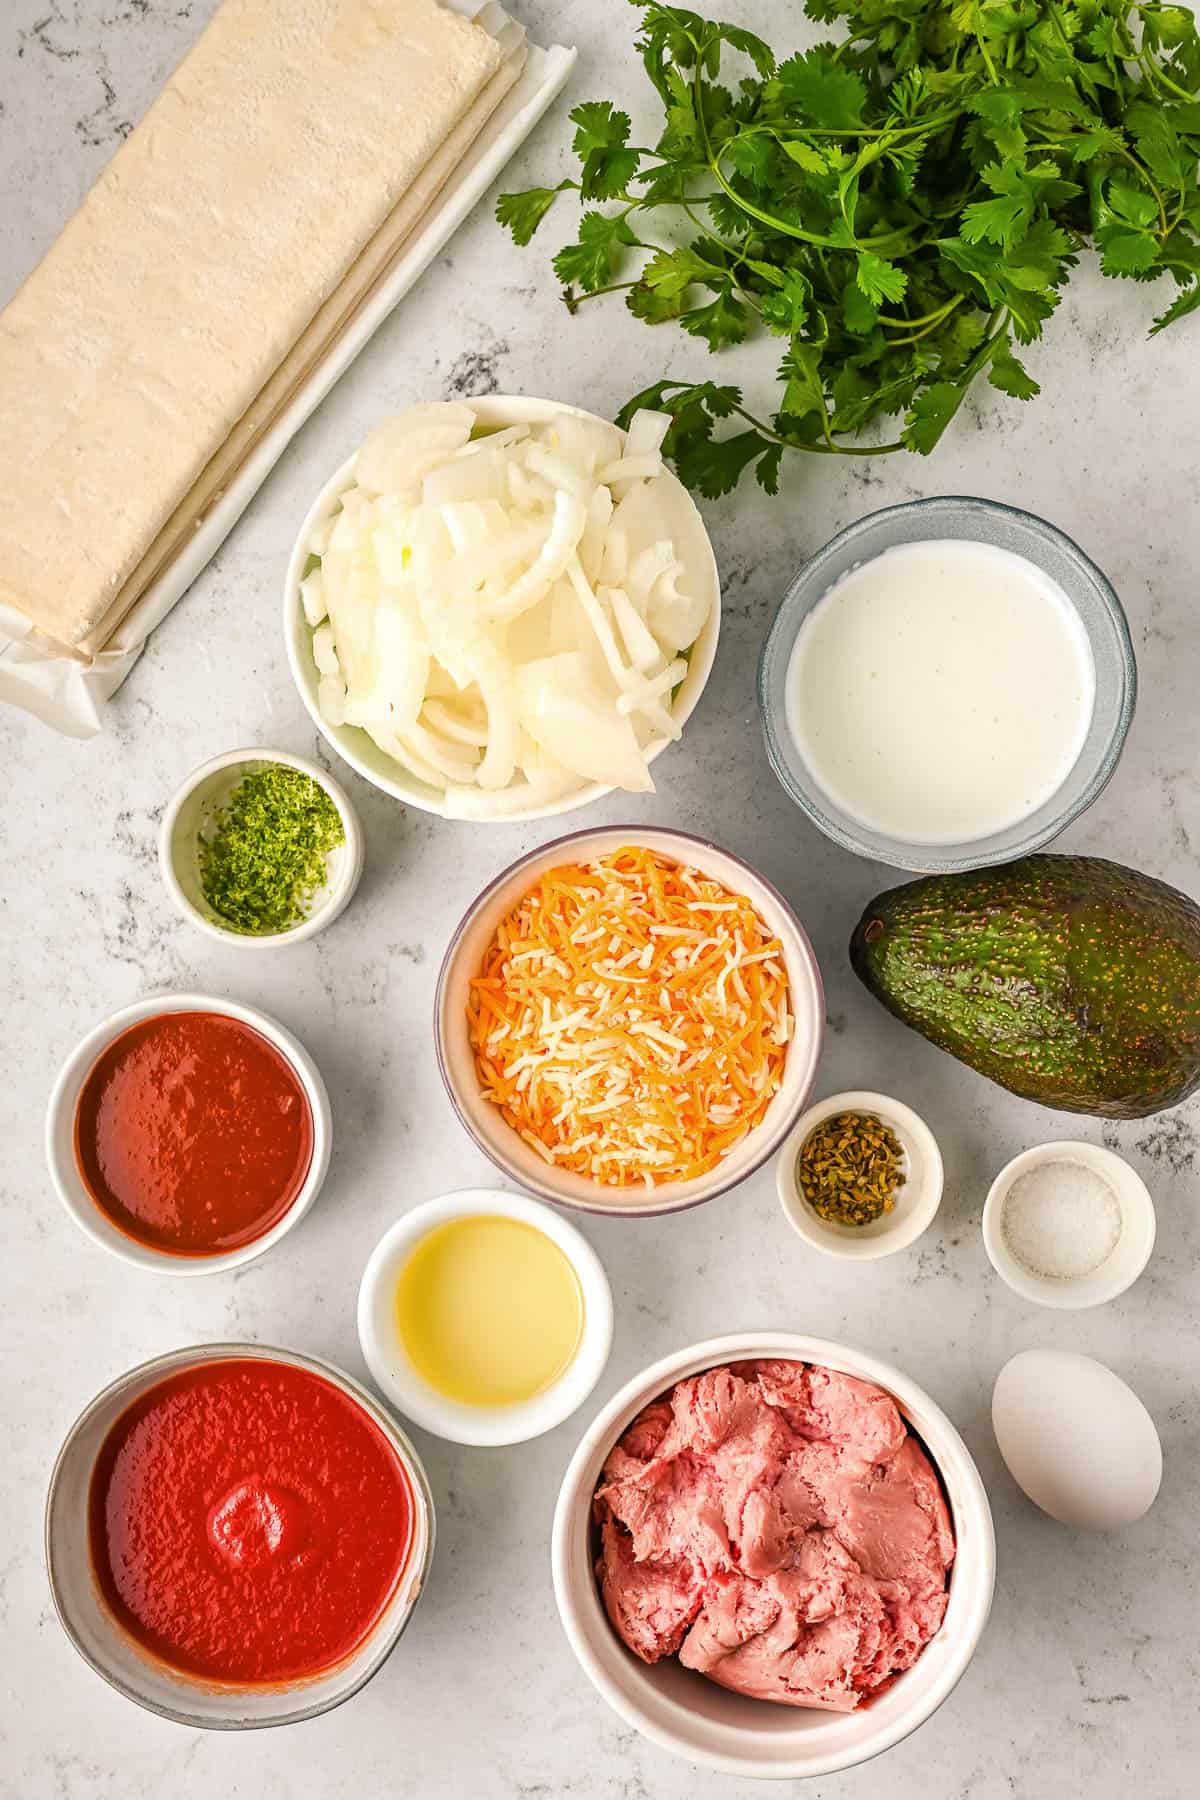 The ingredients for homemade chicken empanadas.